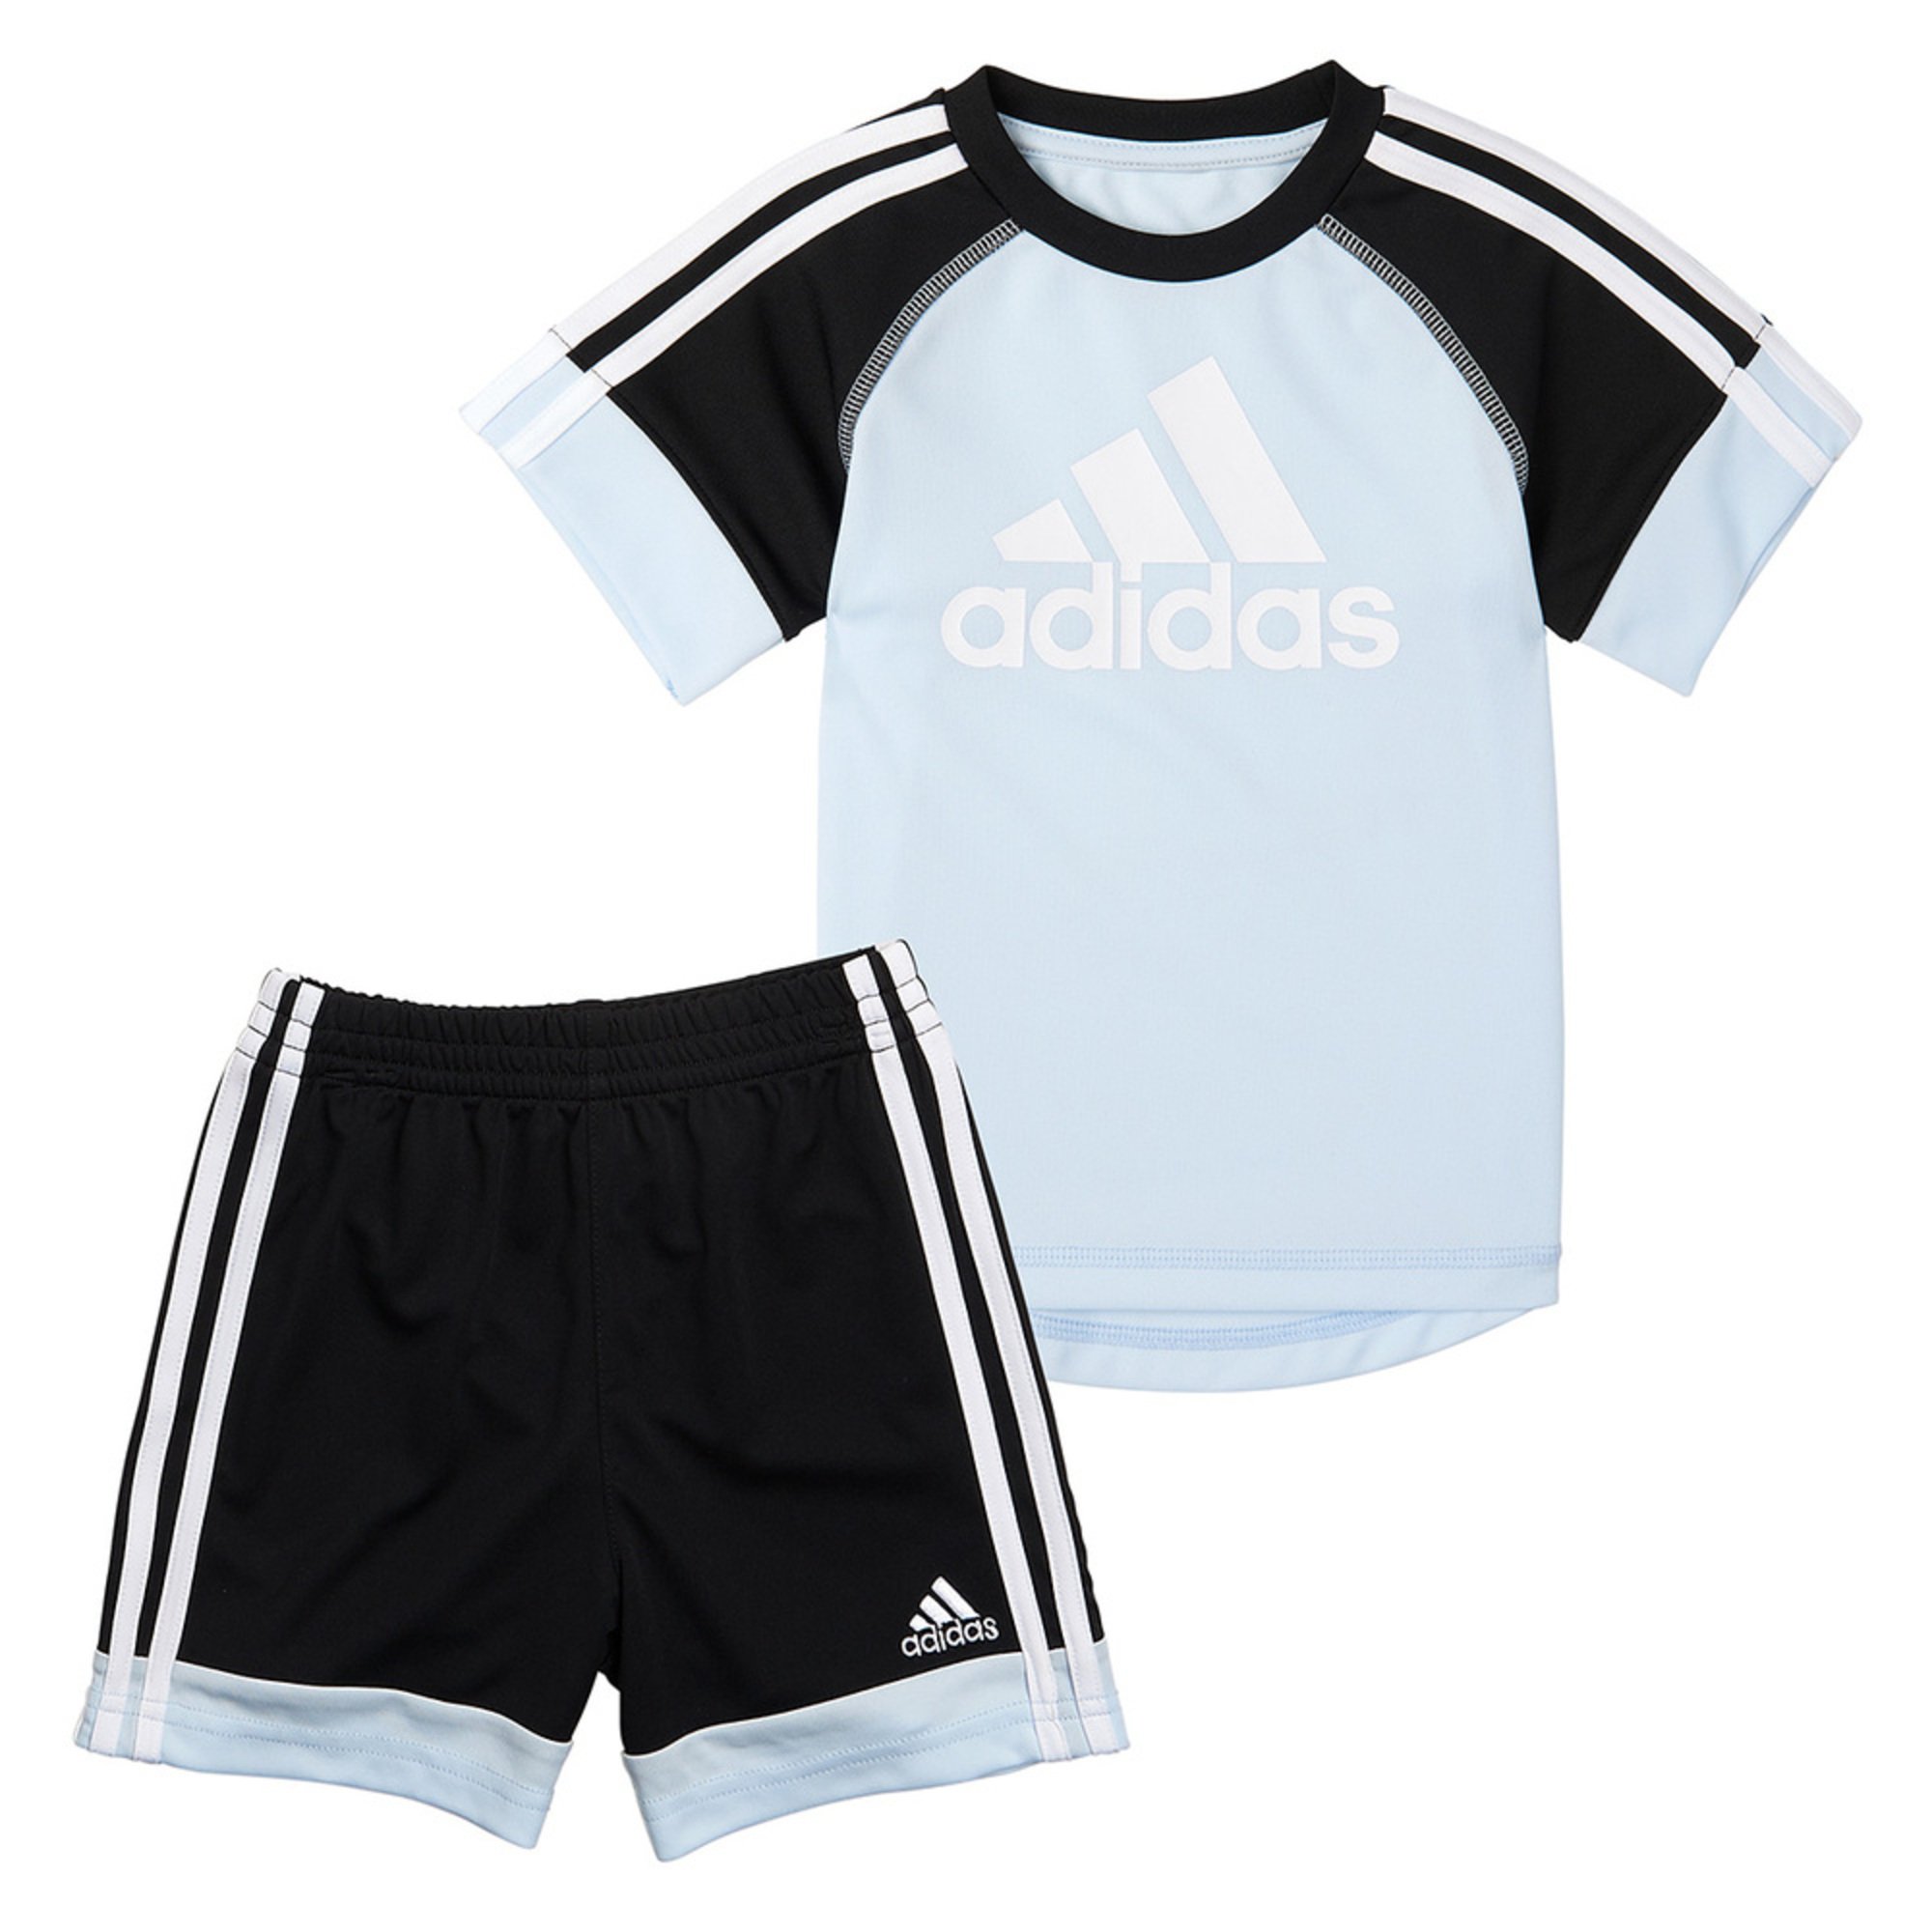 Adidas Baby Boys' Urban Shorts Set 